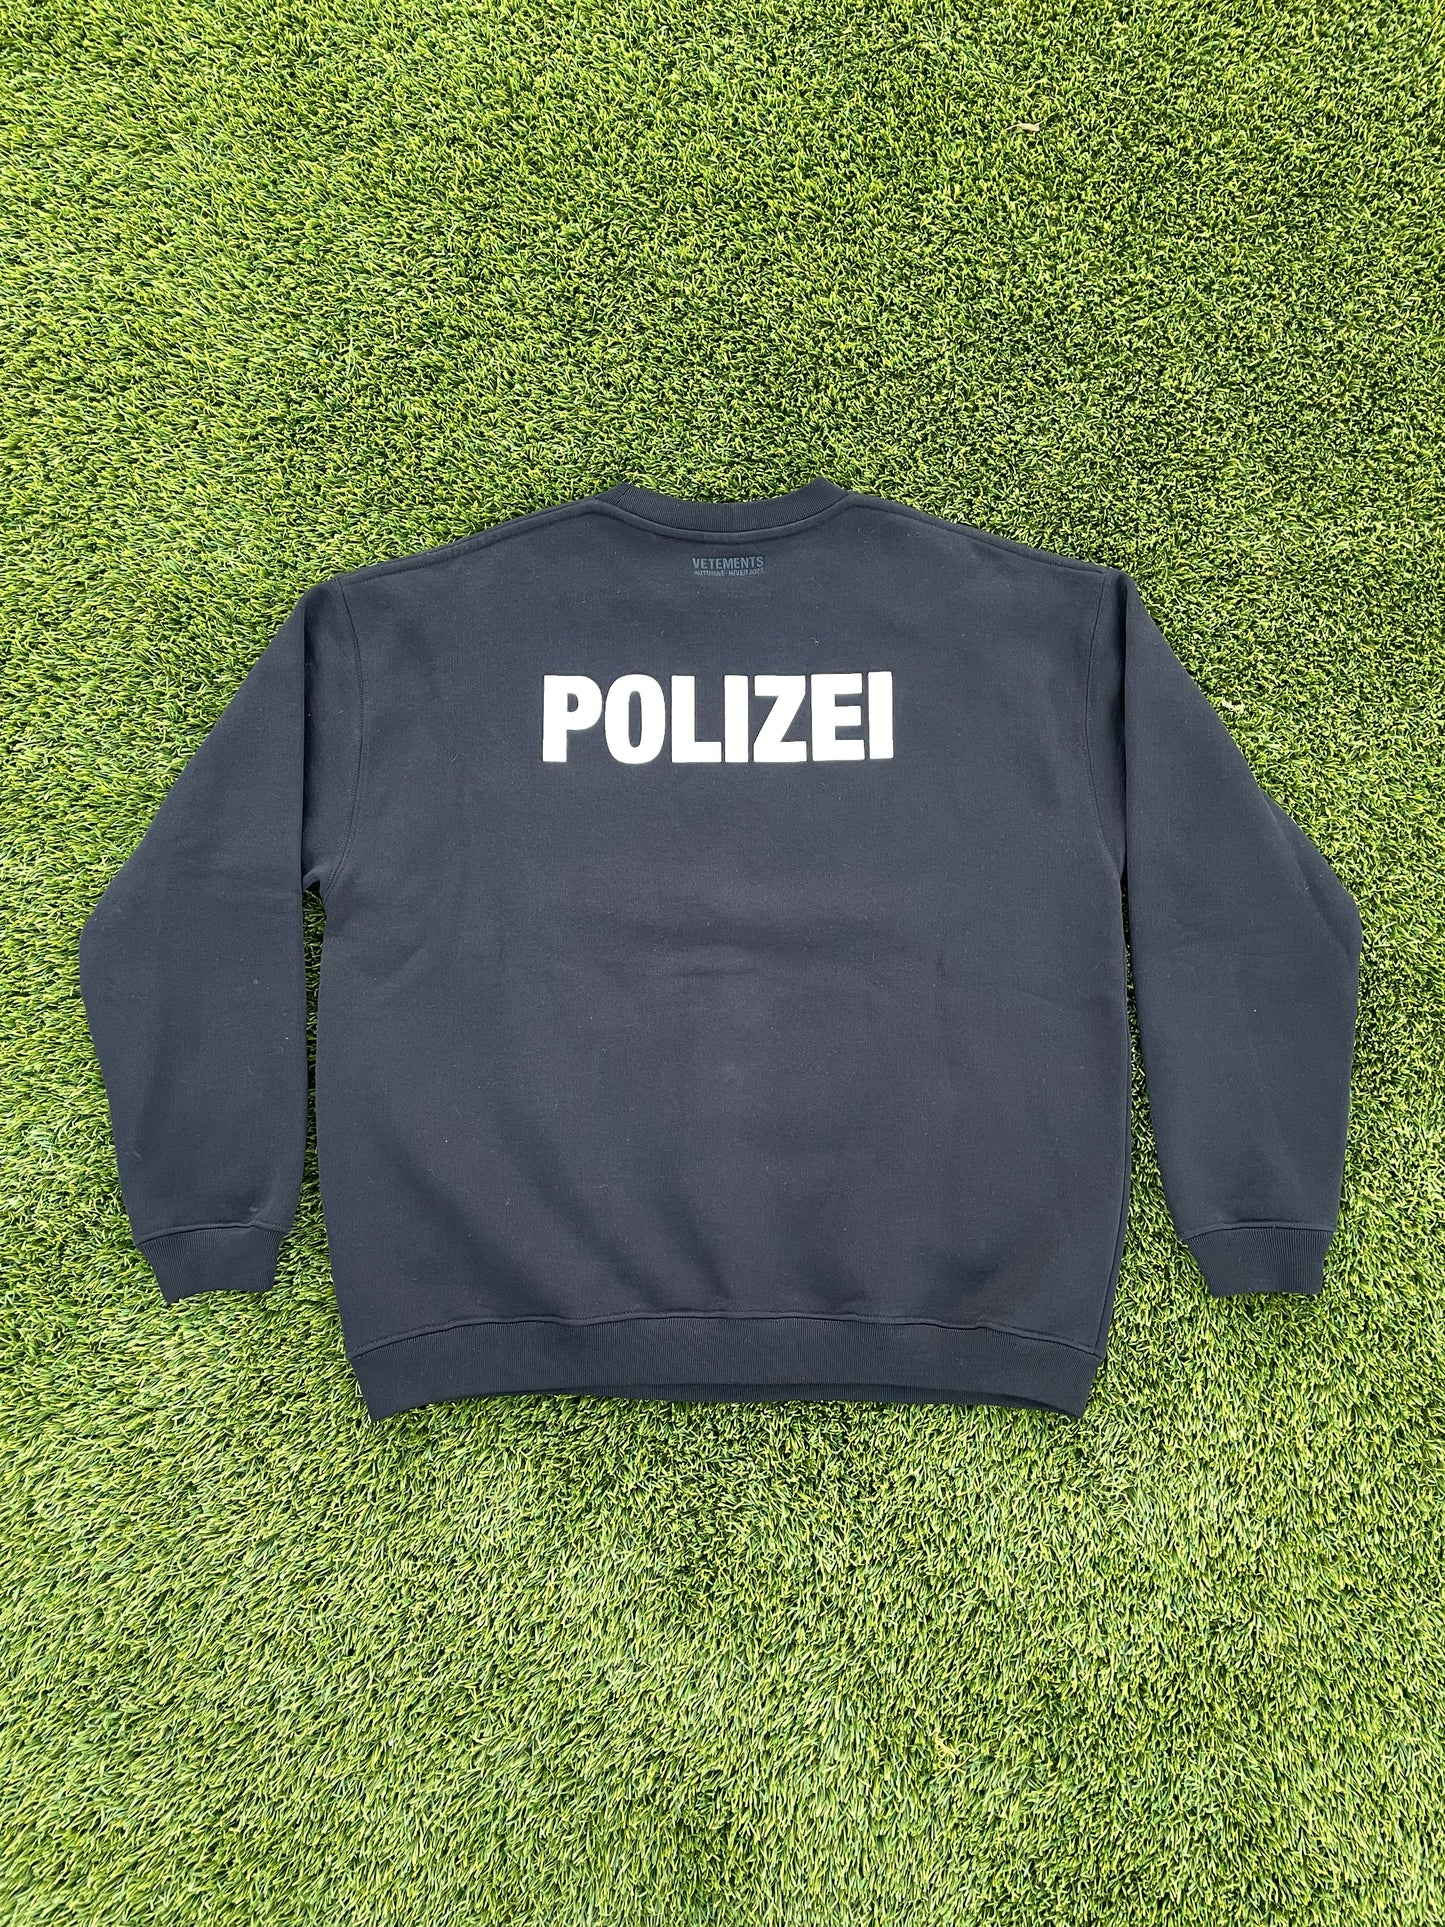 2021 Vetements Polizei Sweater